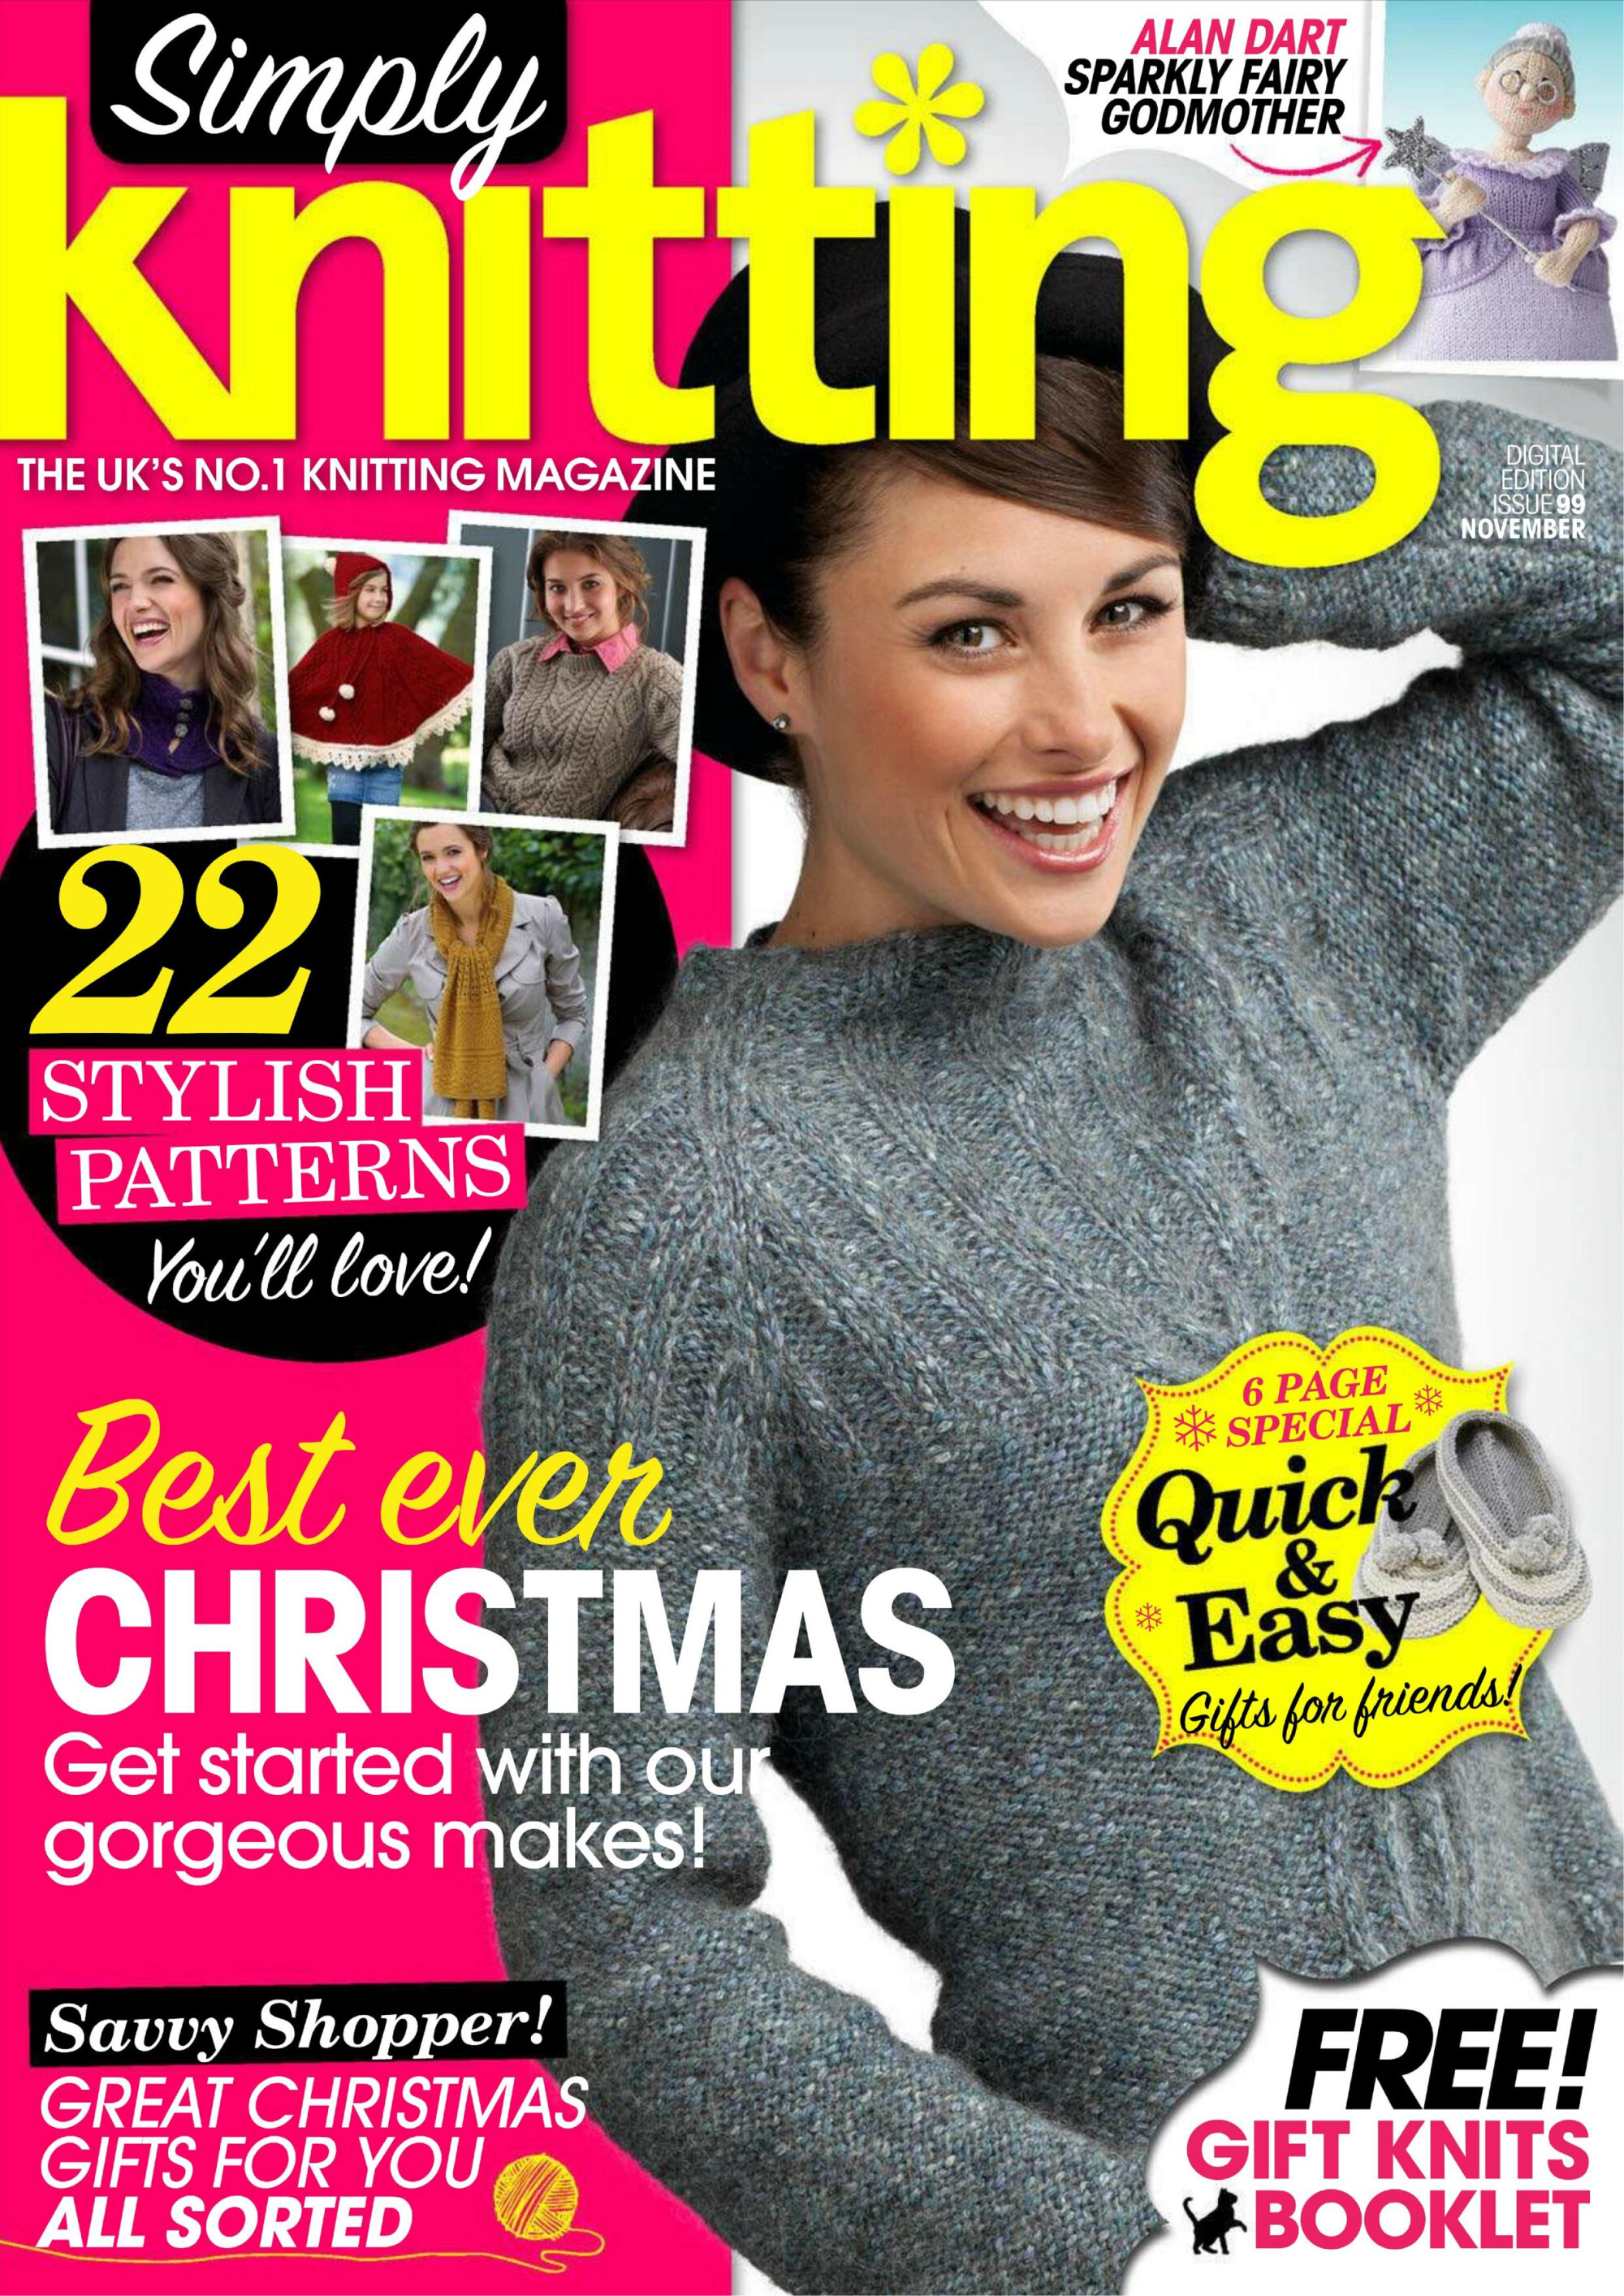 Simple magazine. Knitter 10/2012 журнал. Knitting журнал. Журнал simply Knitting 134. Журнал книттинг подписка.